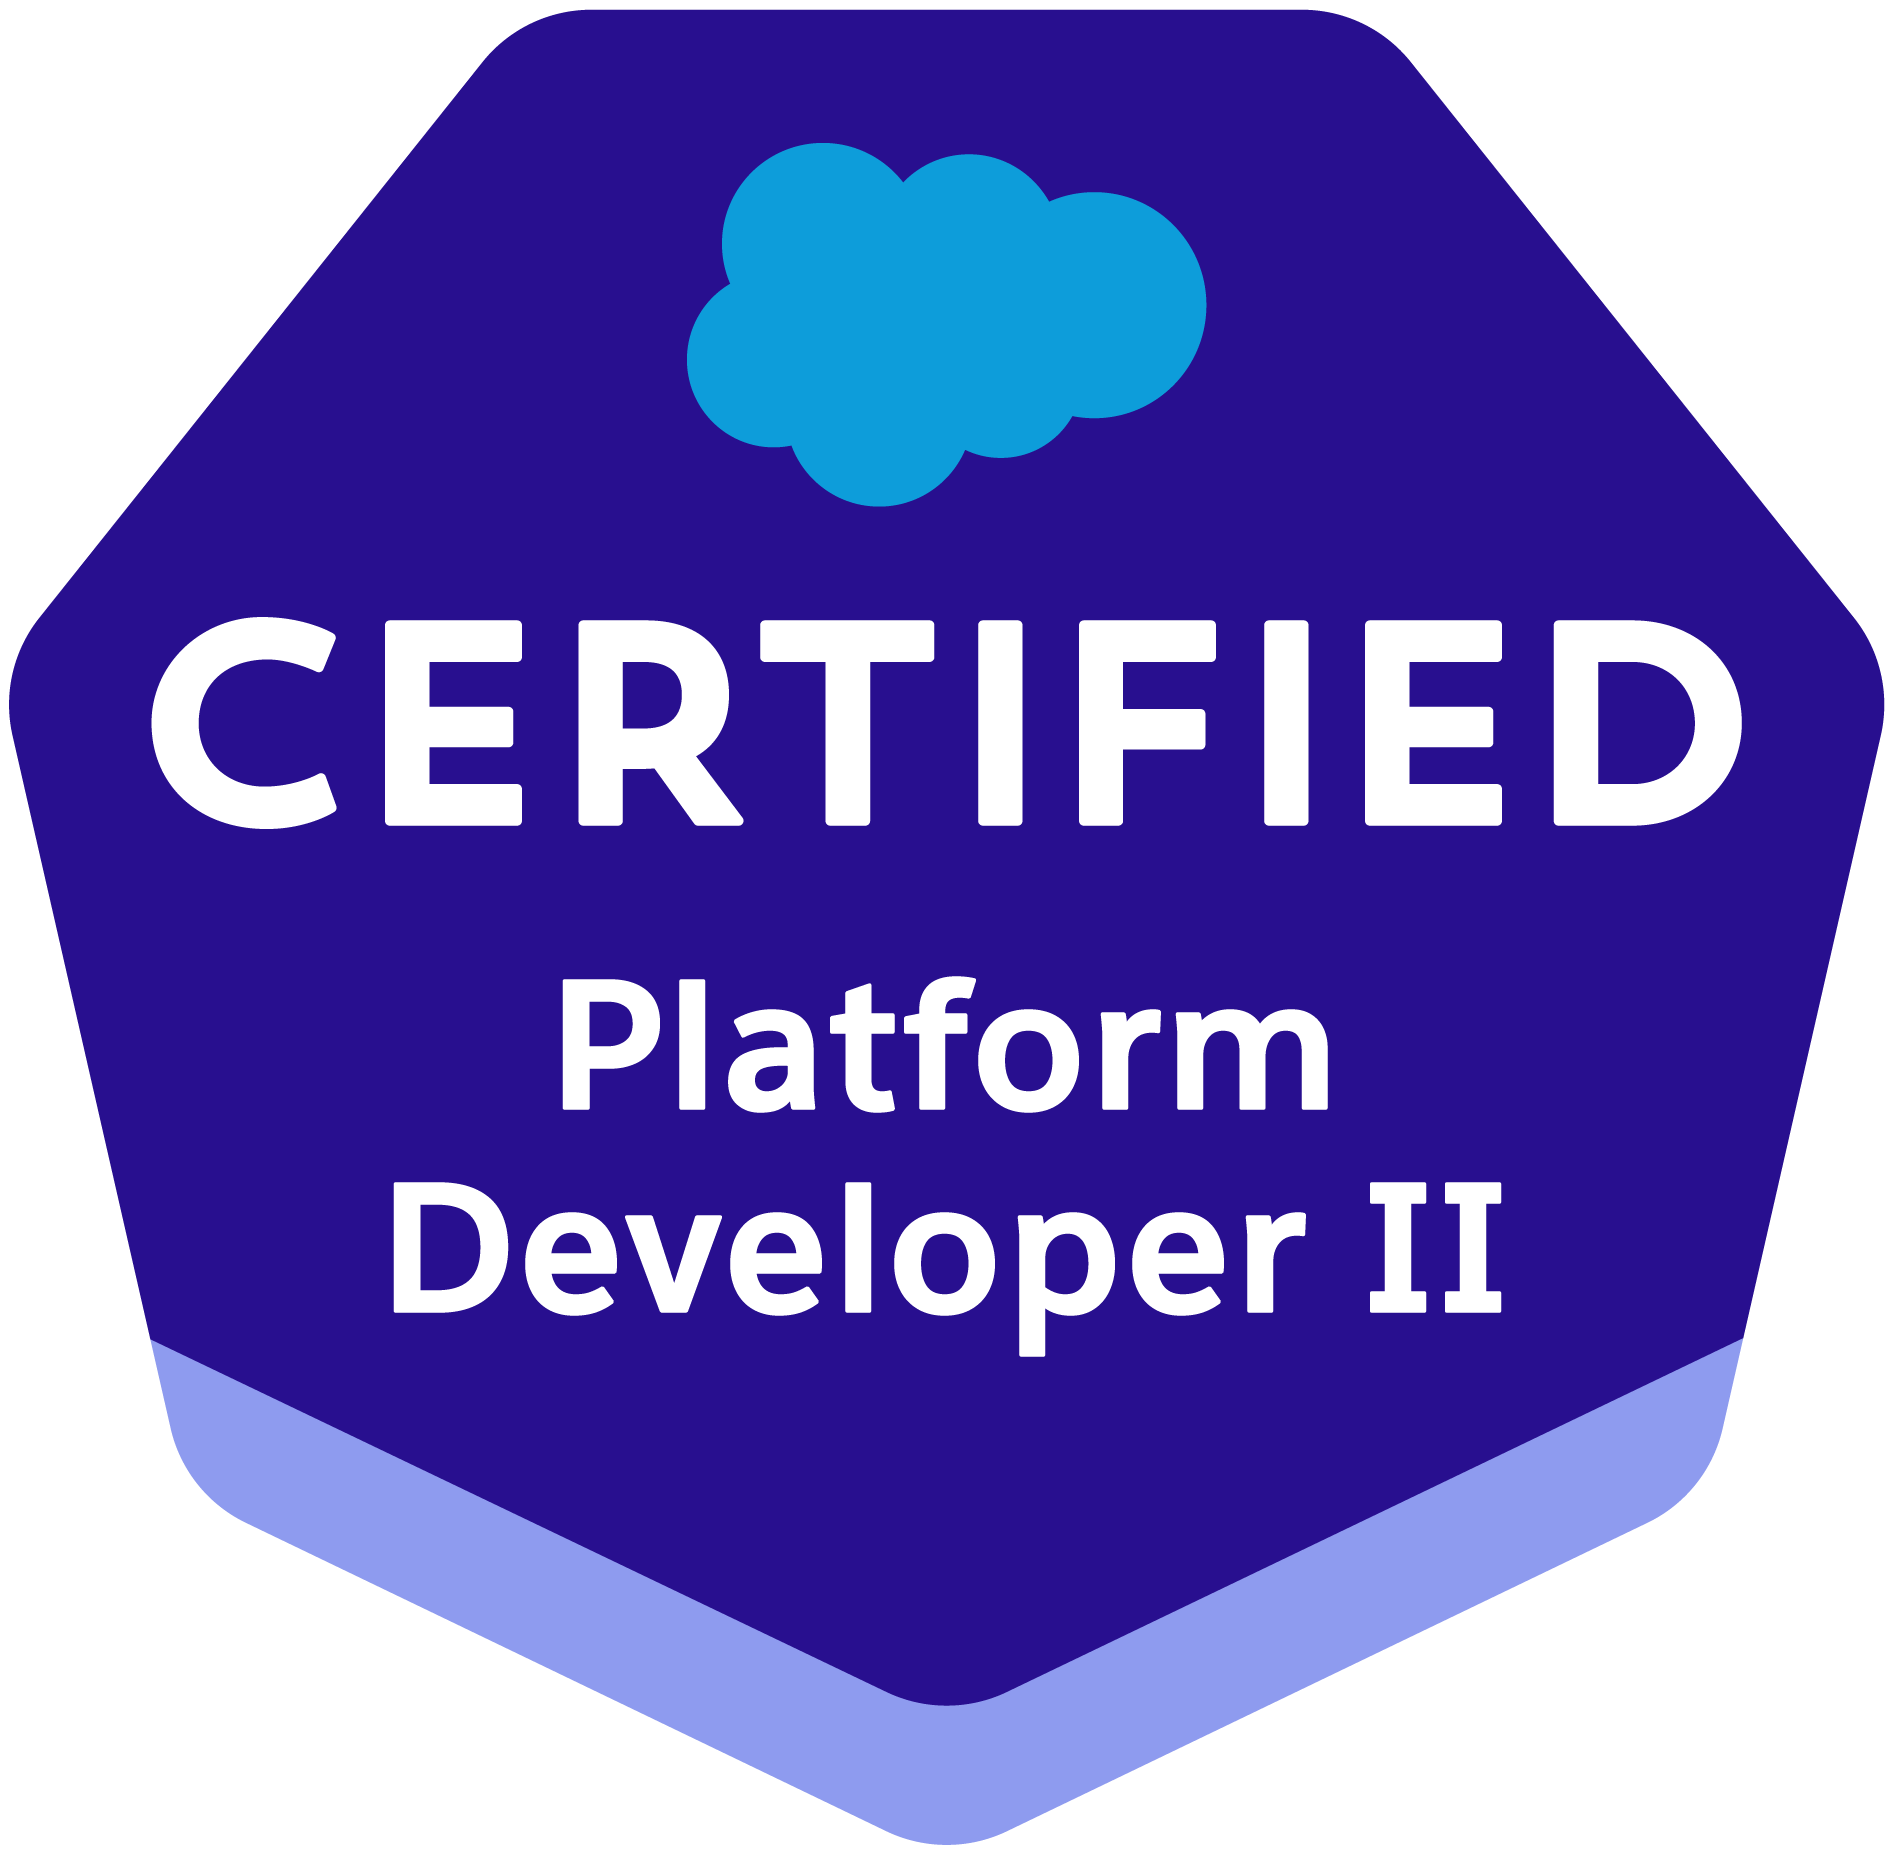 Platform Developer II certification